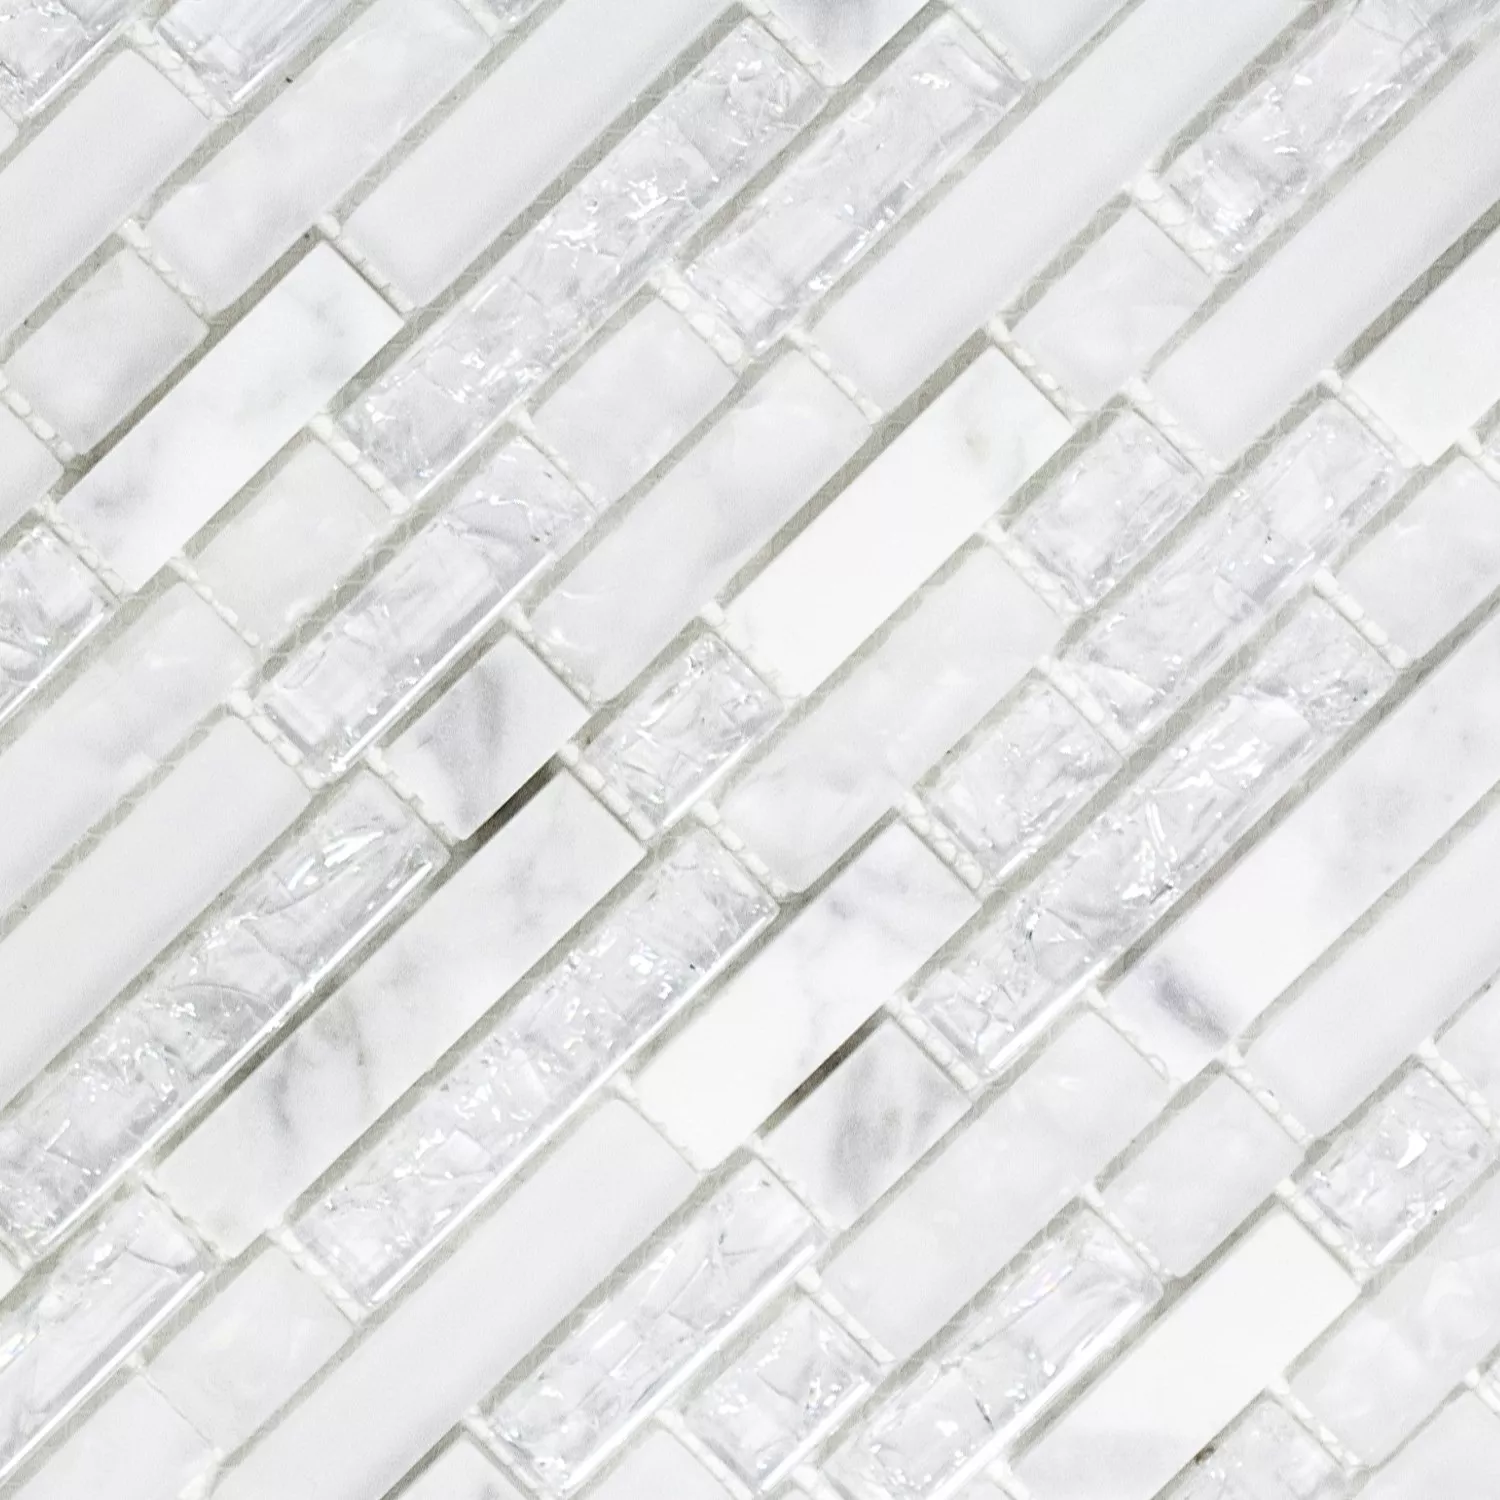 Sample Mosaic Tiles Glass Natural Stone SmoothBroken Glass White